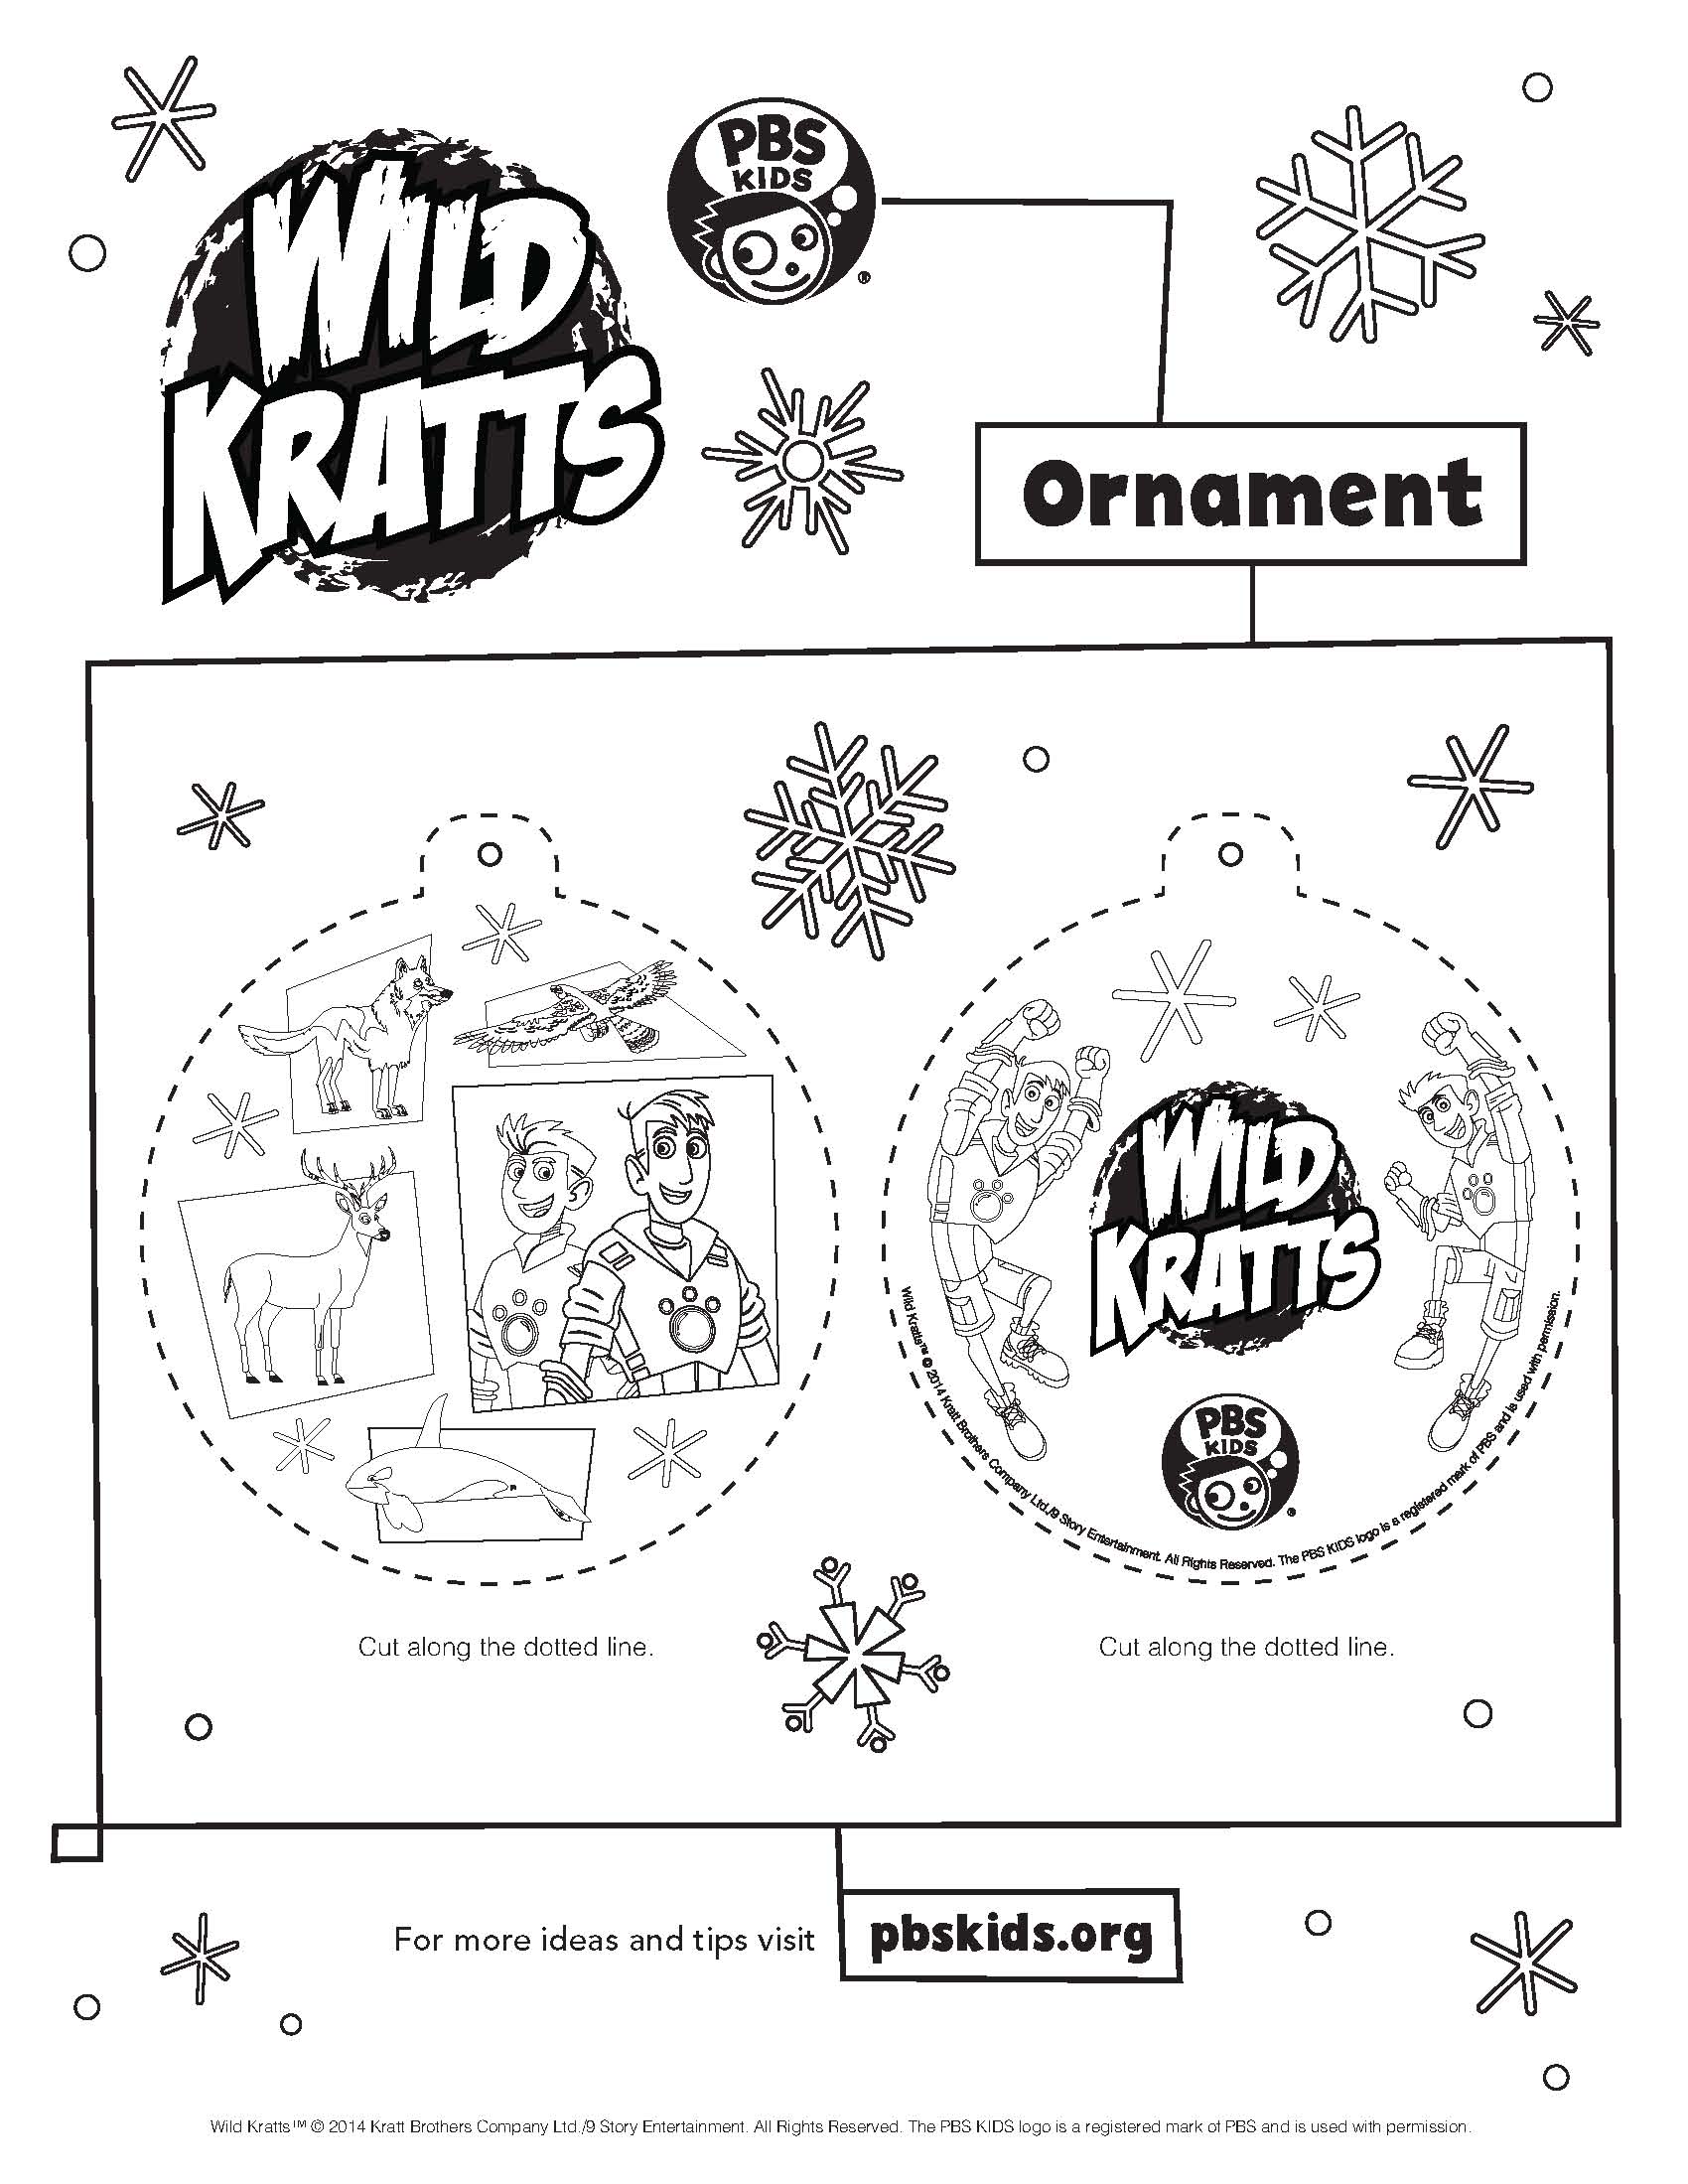 Wild kratts ornament_Page_2